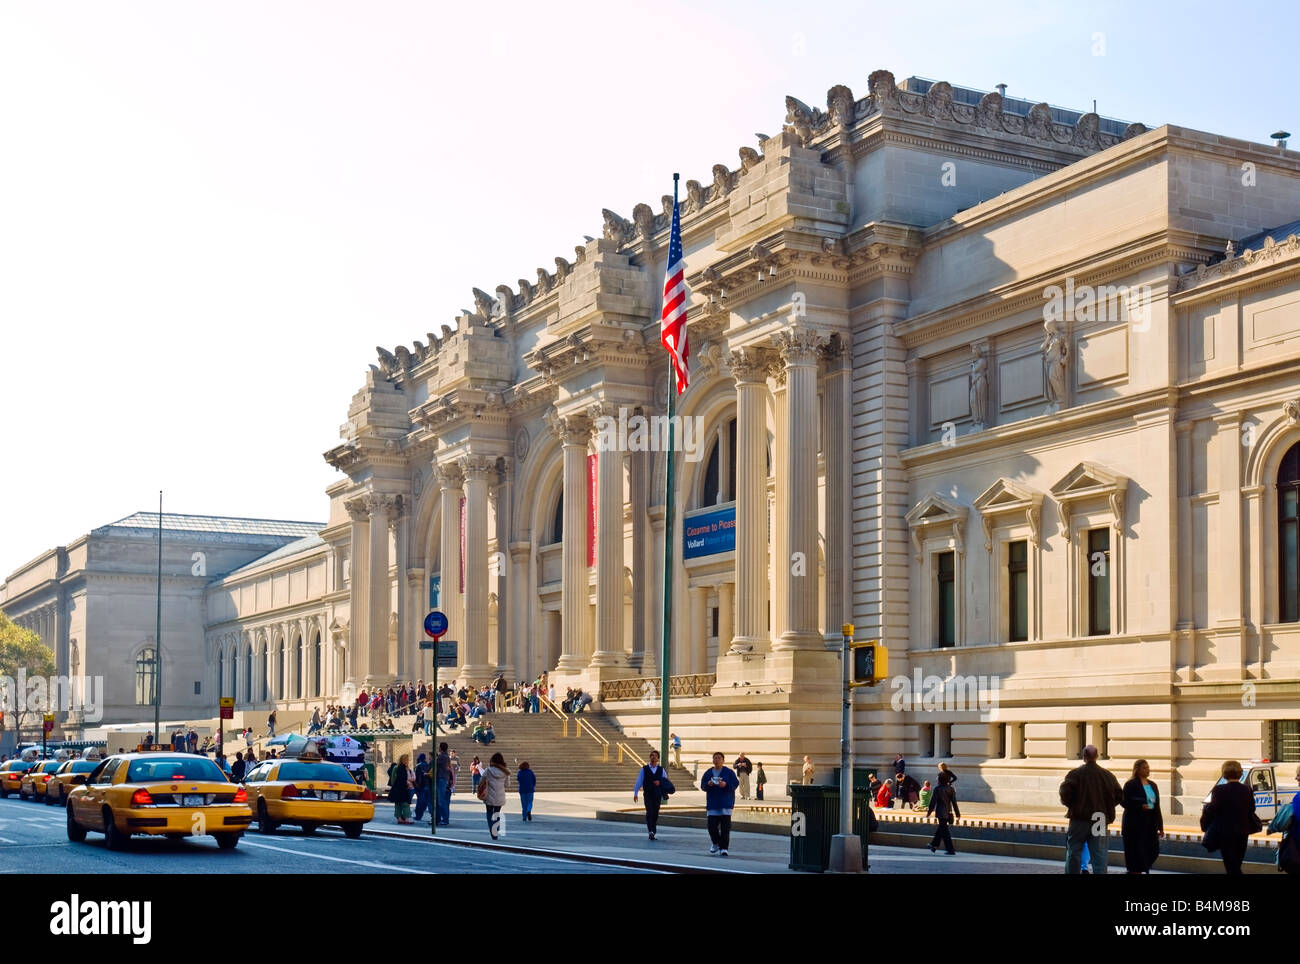 New York City. The Metropolitan Museum of Art. Main entrance exterior on Fifth Avenue. Stock Photo